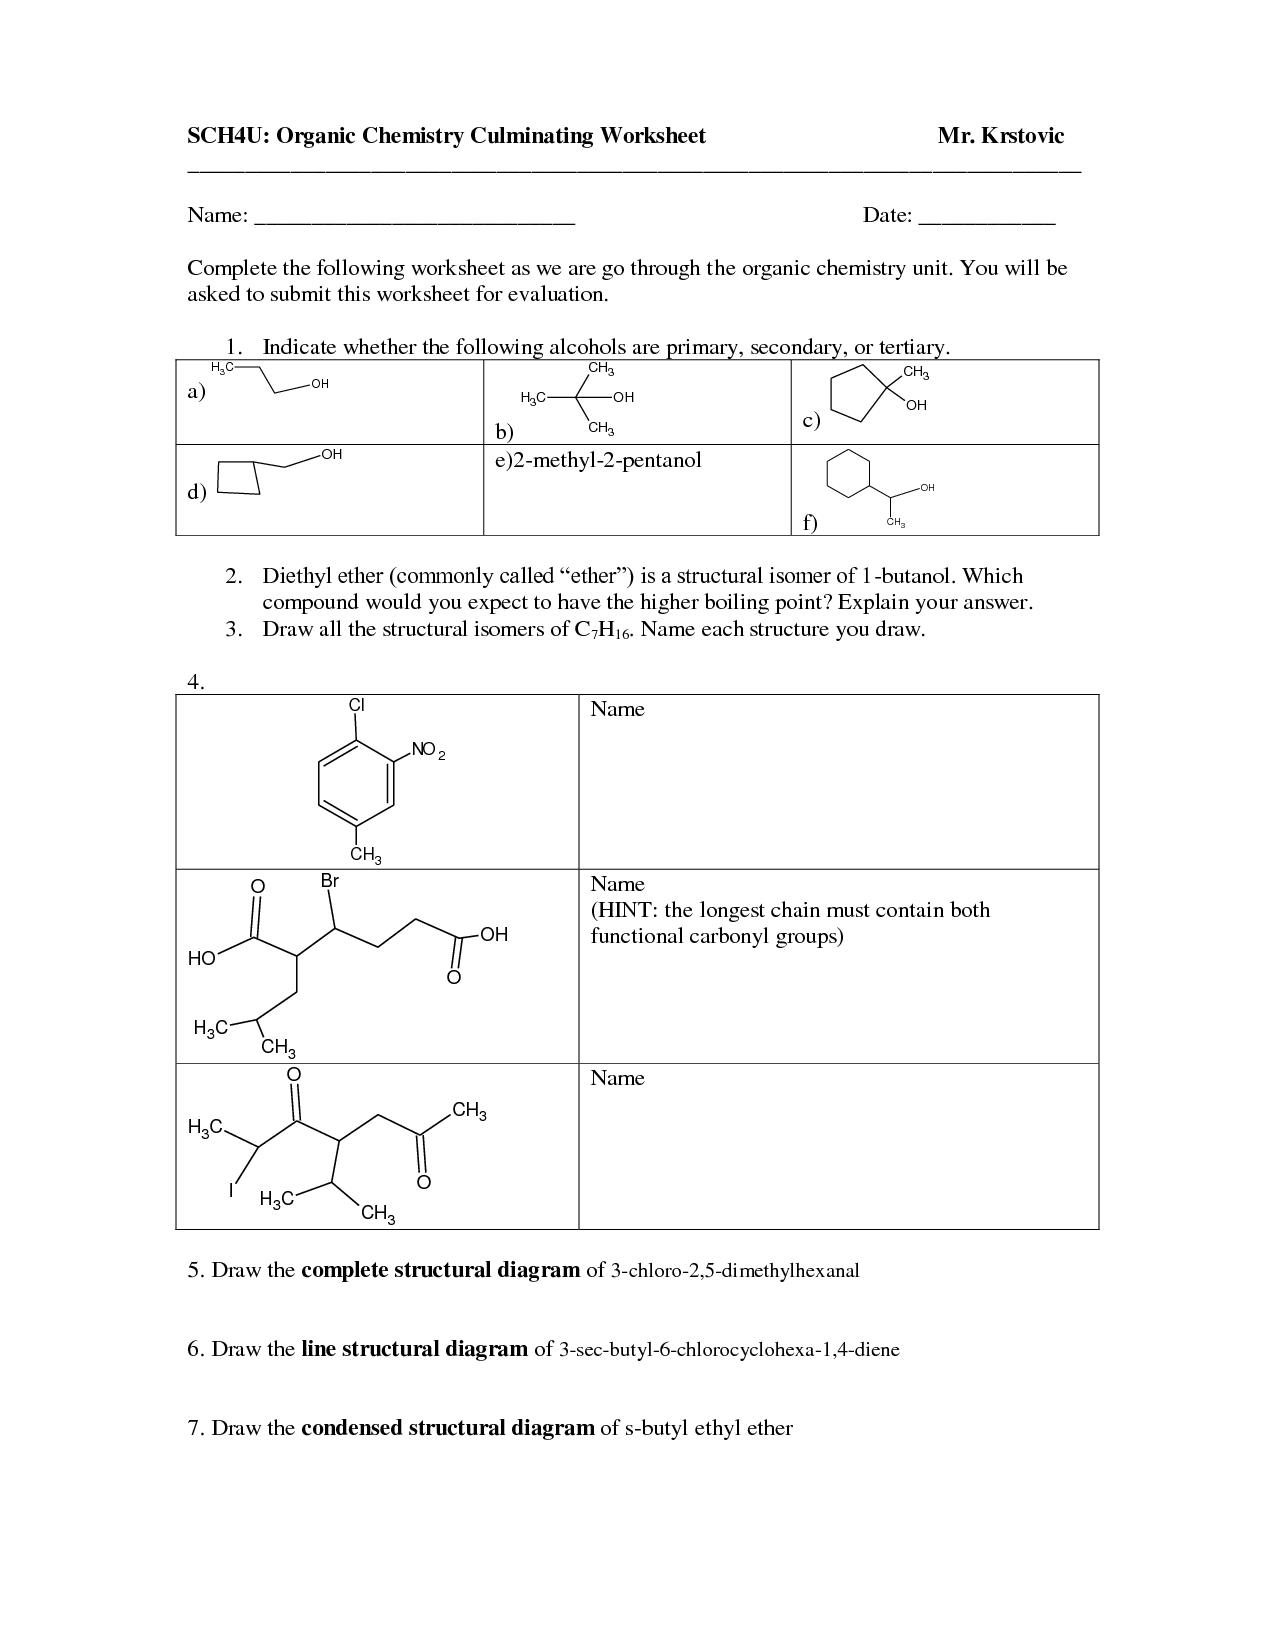 Organic Chemistry Worksheets Image